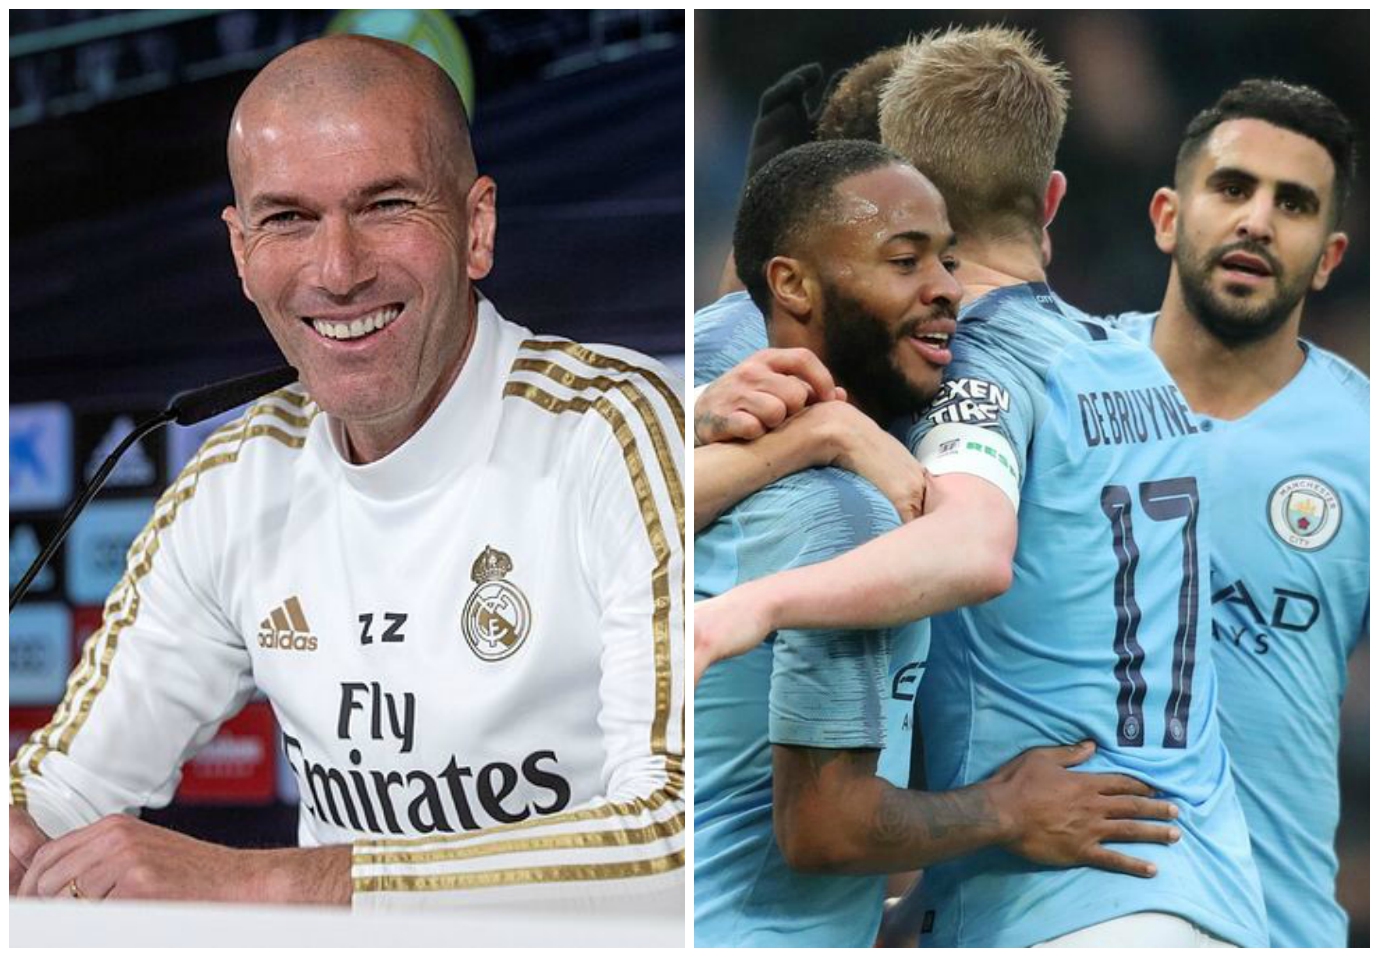 Zidane y Manchester City